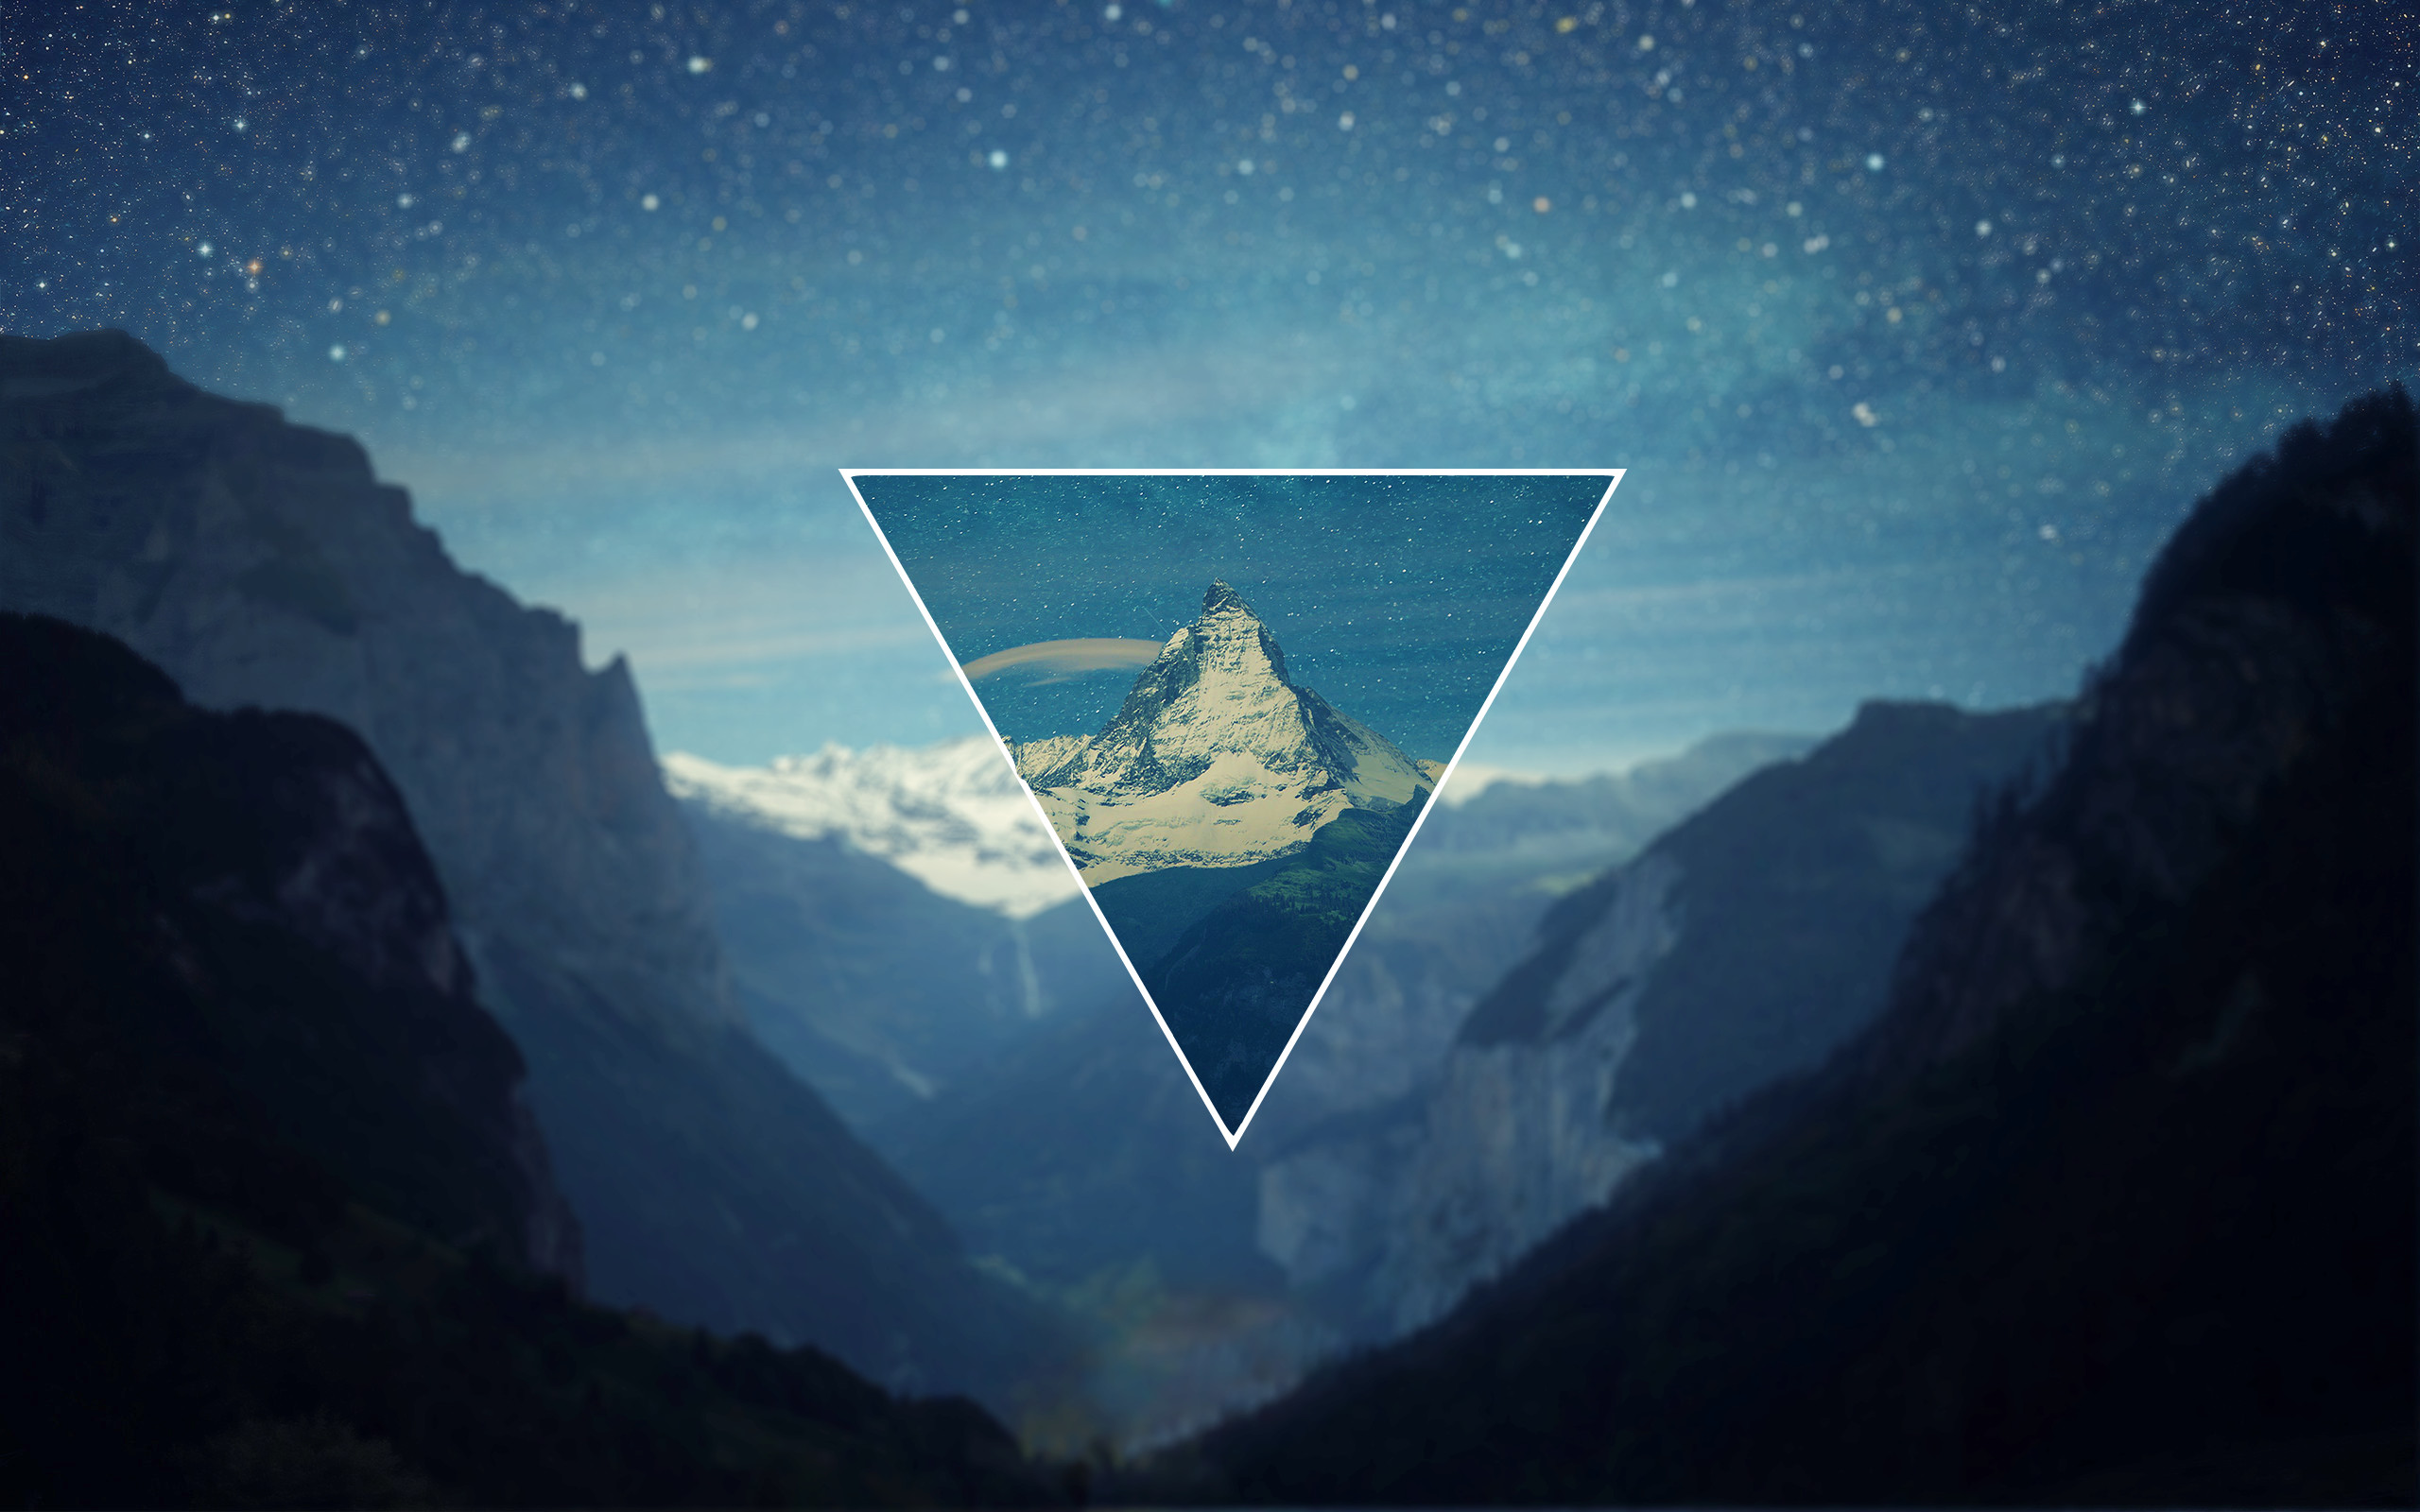 2560x1600 Art in combination with a beautiful landscape photo (Matterhorn).